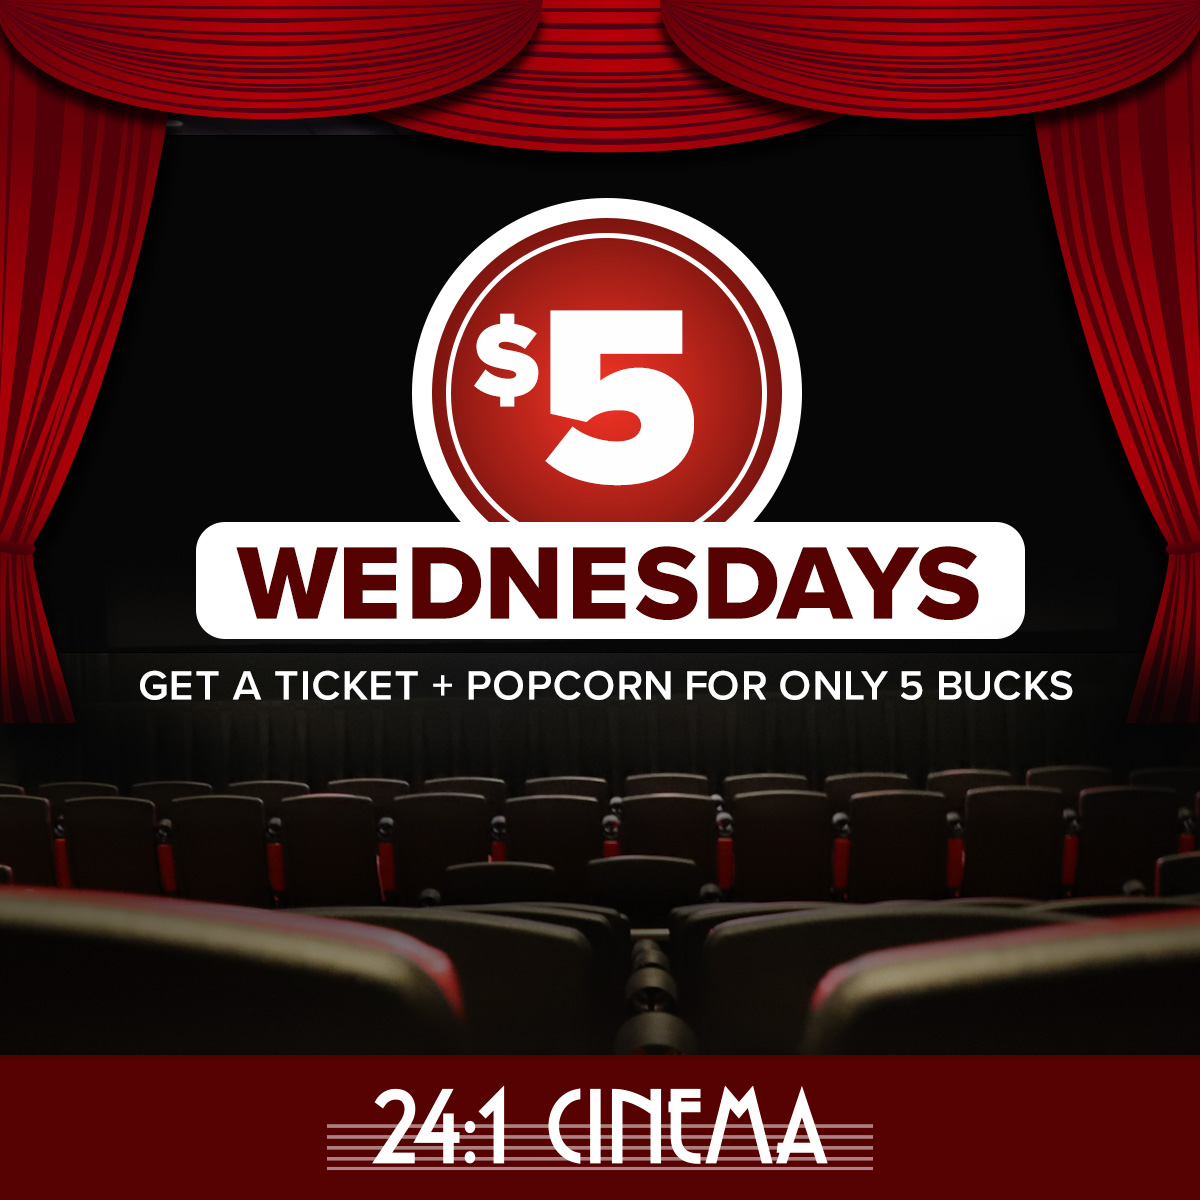 $5 Wednesdays at the 24:1 Cinema